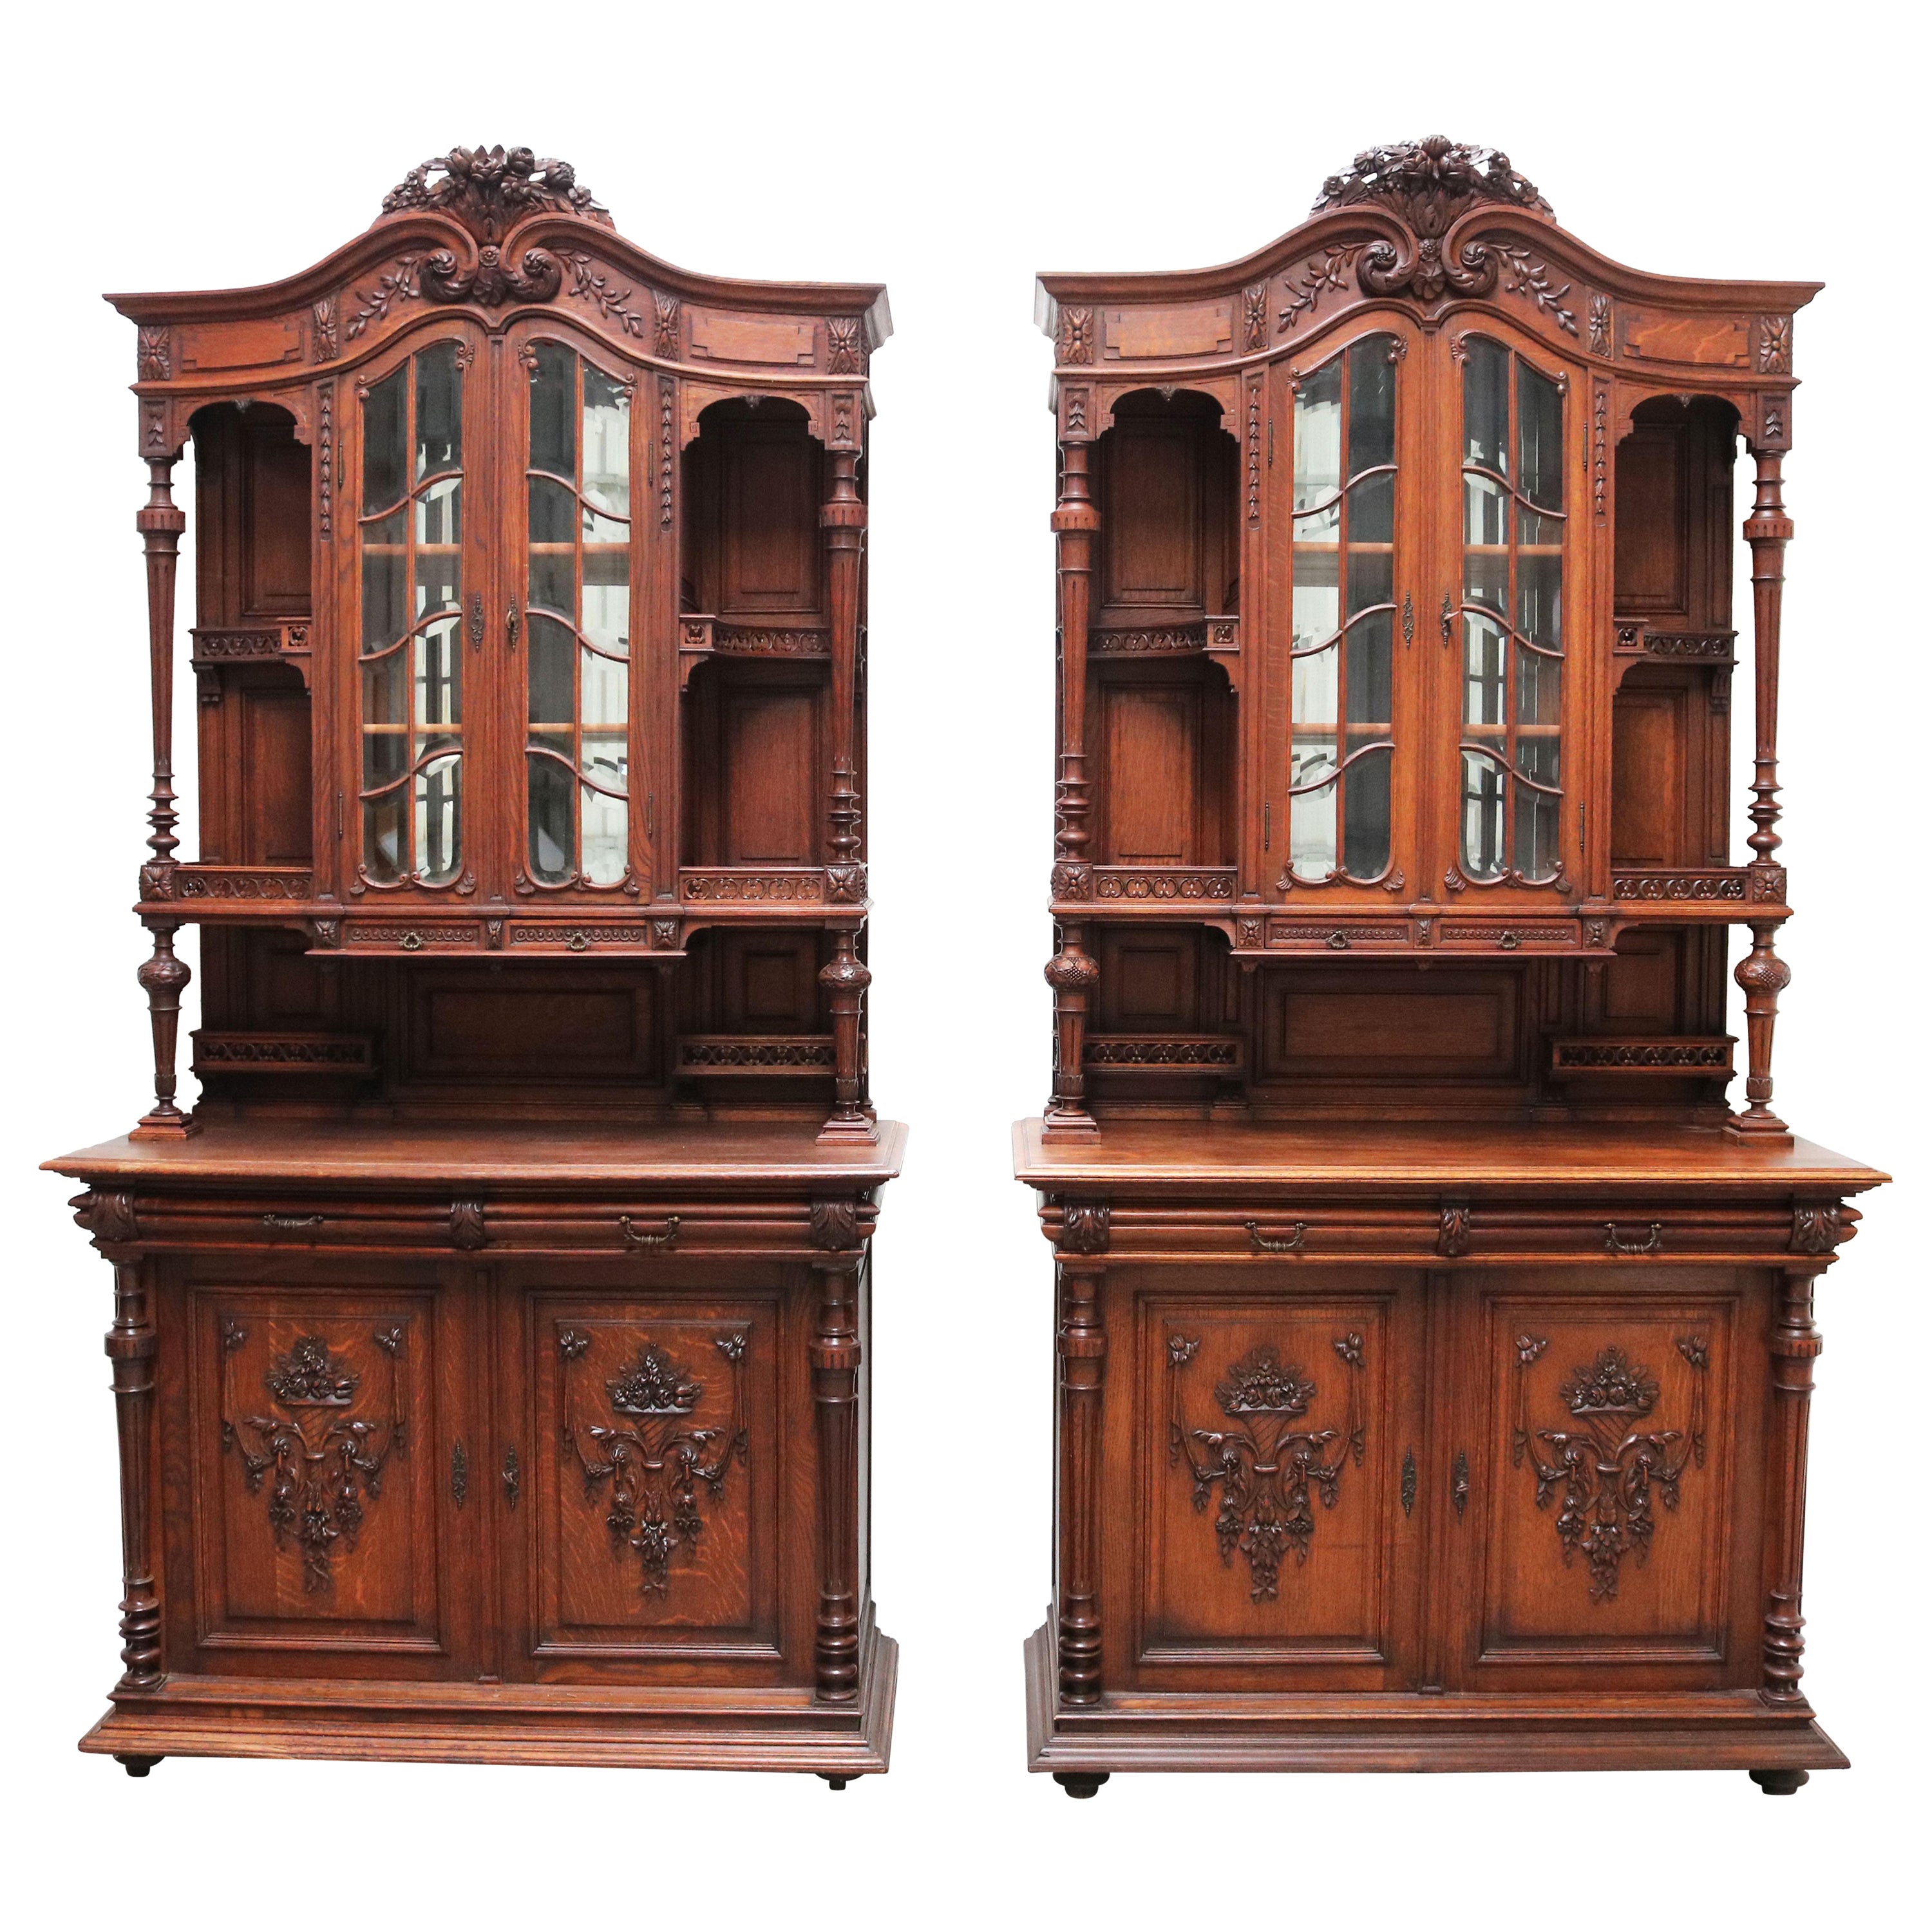 Pair of Large French Antique Renaissance Revival Buffet Cabinet Oak 19th Century For Sale